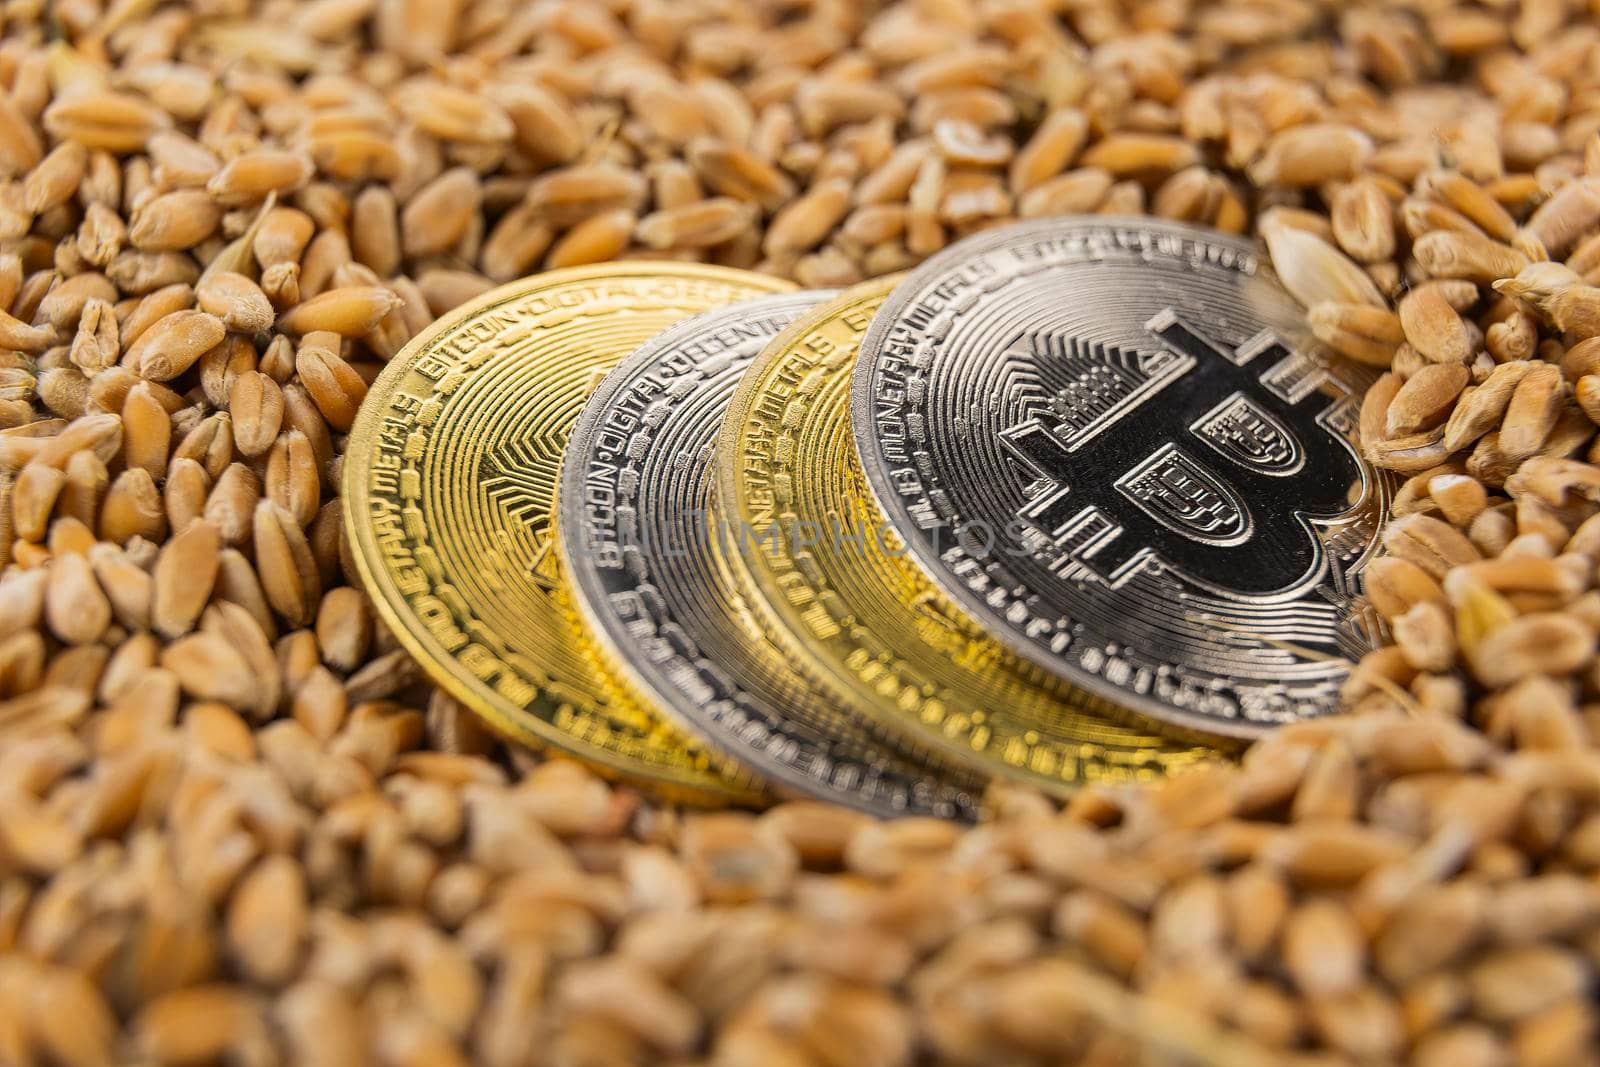 bitcoin coins lie on wheat grain by zokov